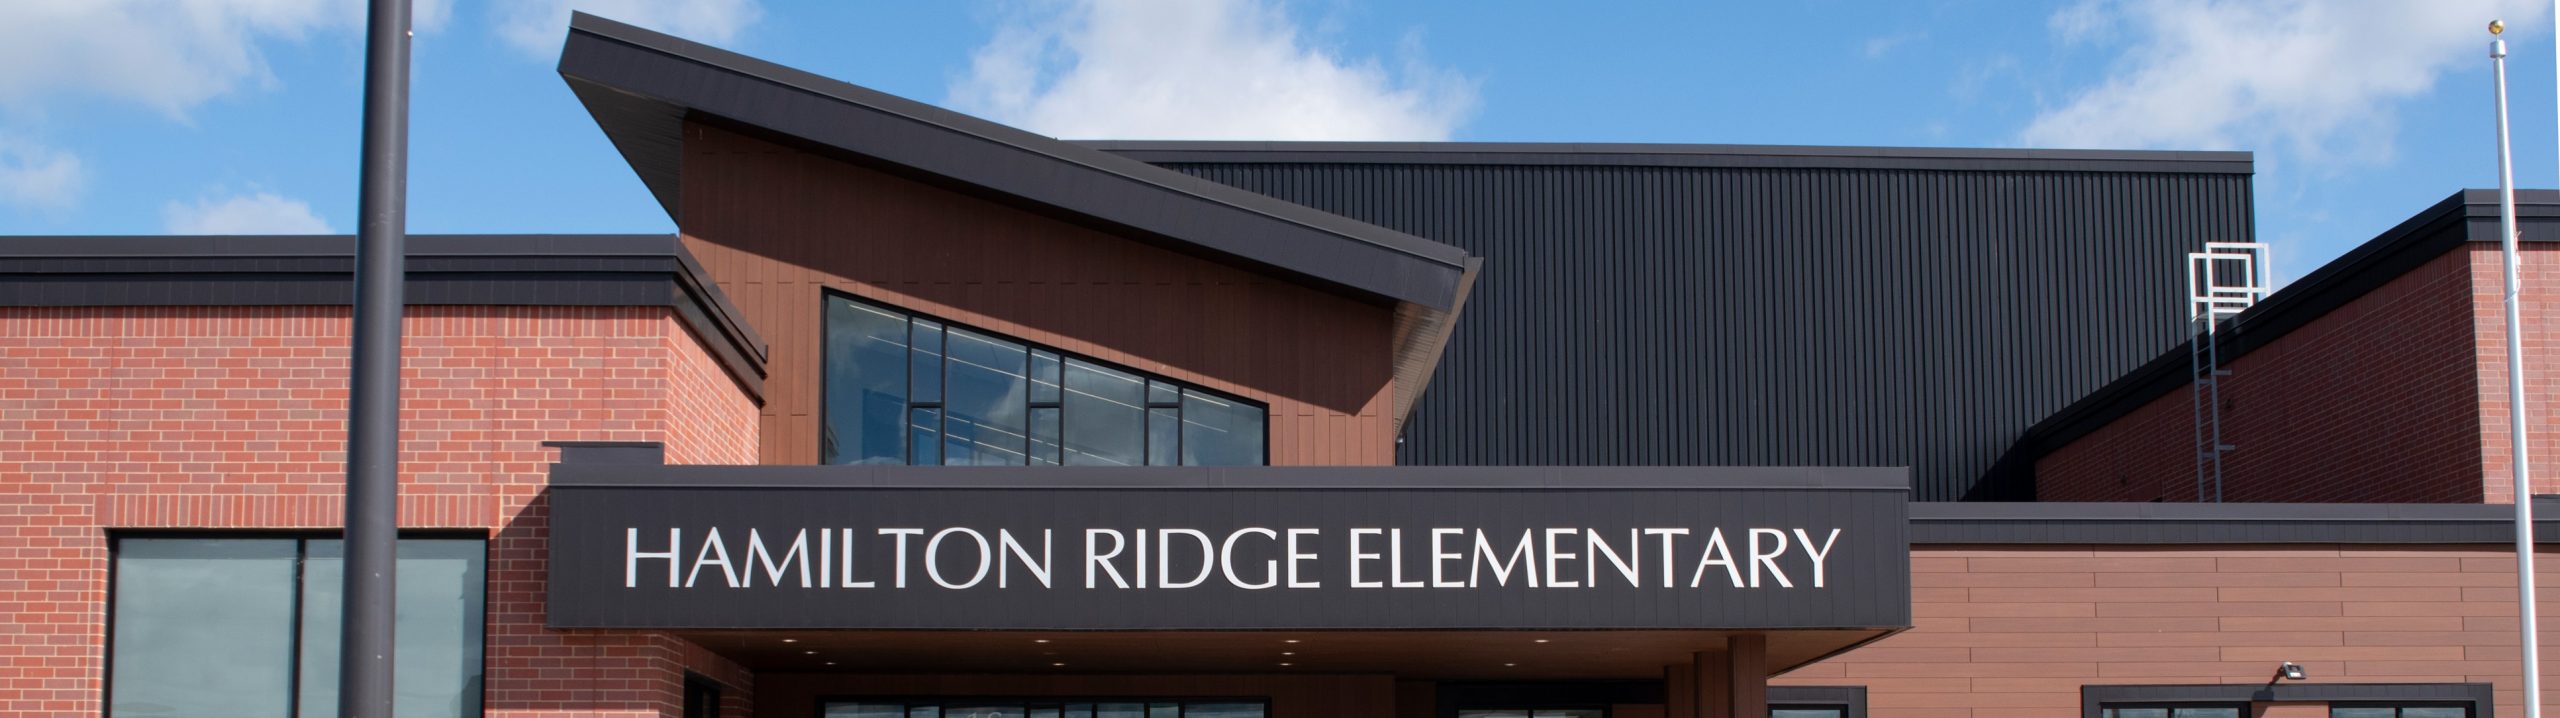 Hamilton Ridge Elementary